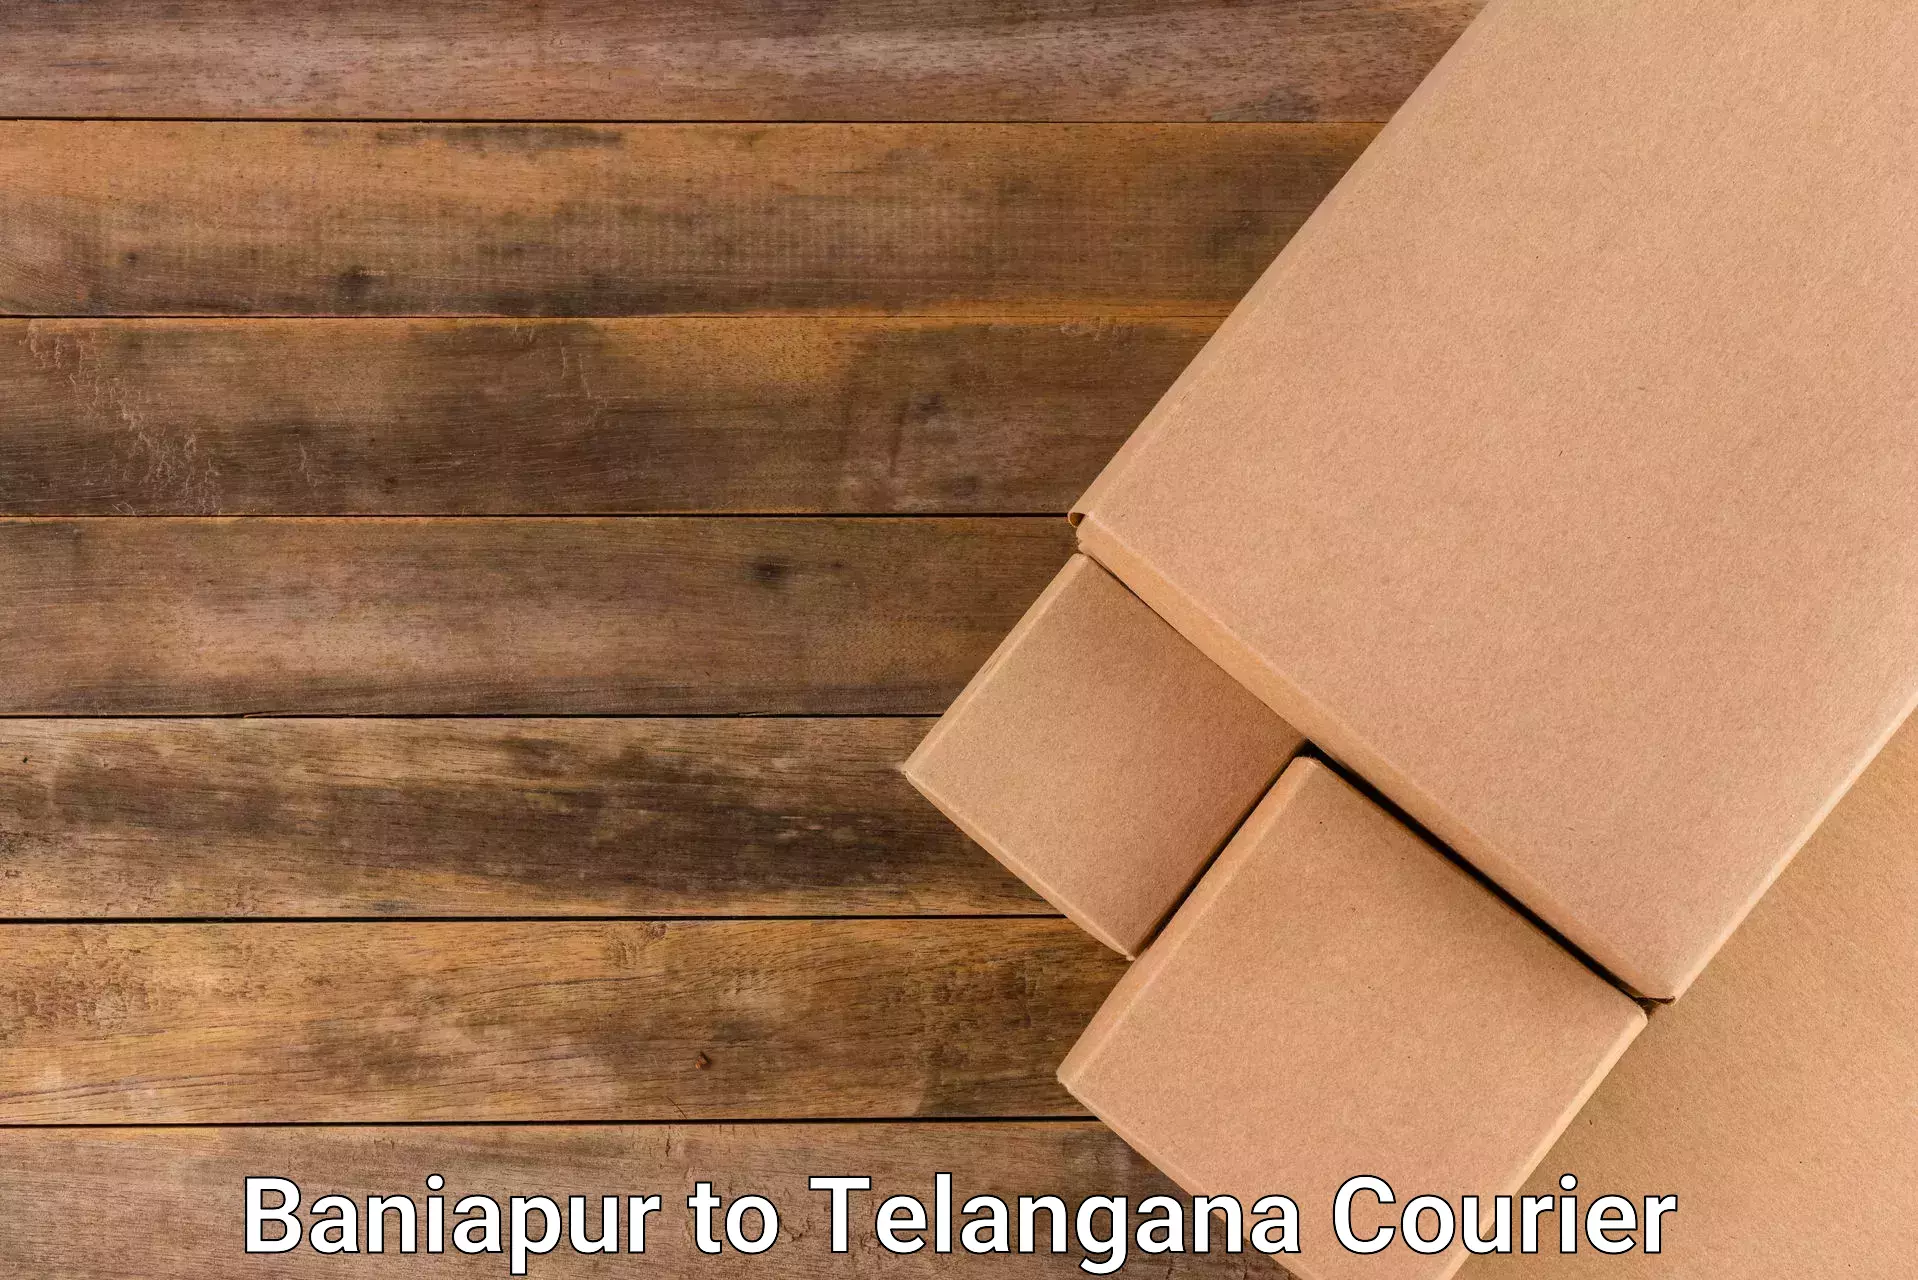 User-friendly courier app Baniapur to Jadcherla